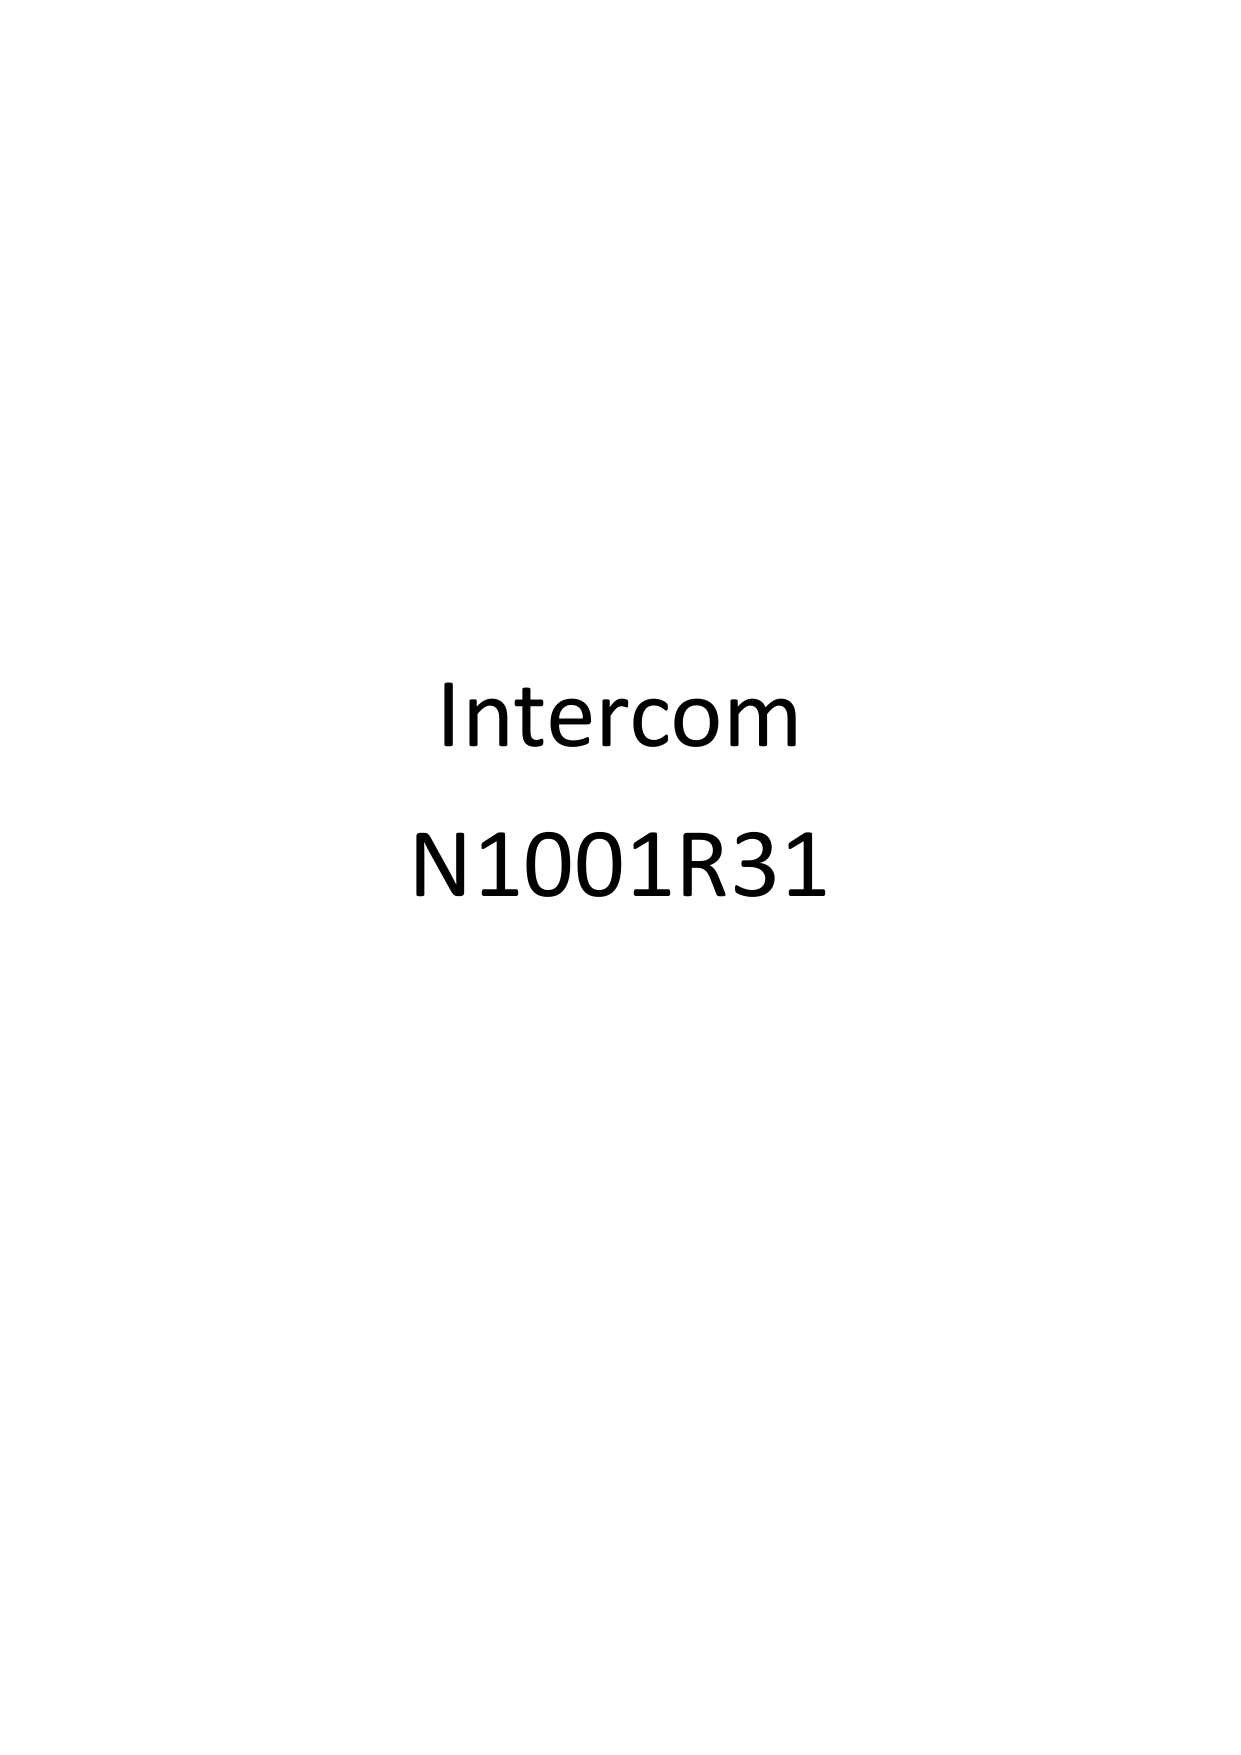 IntercomN1001R31